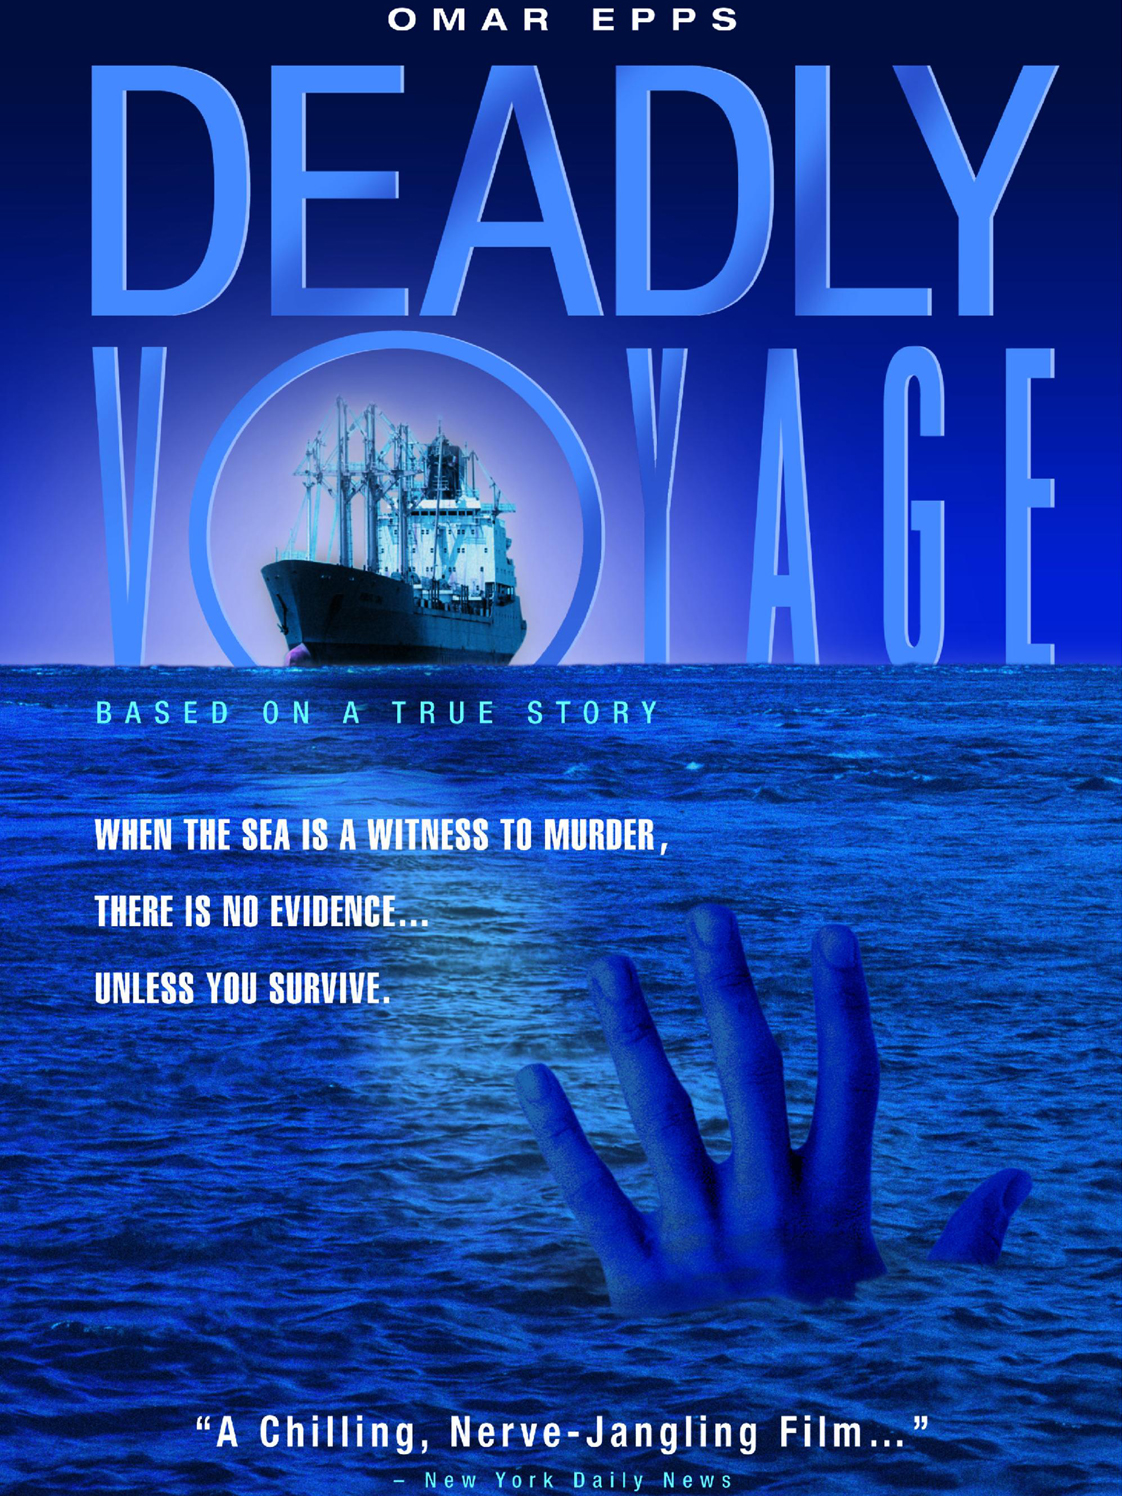 deadly voyage cast